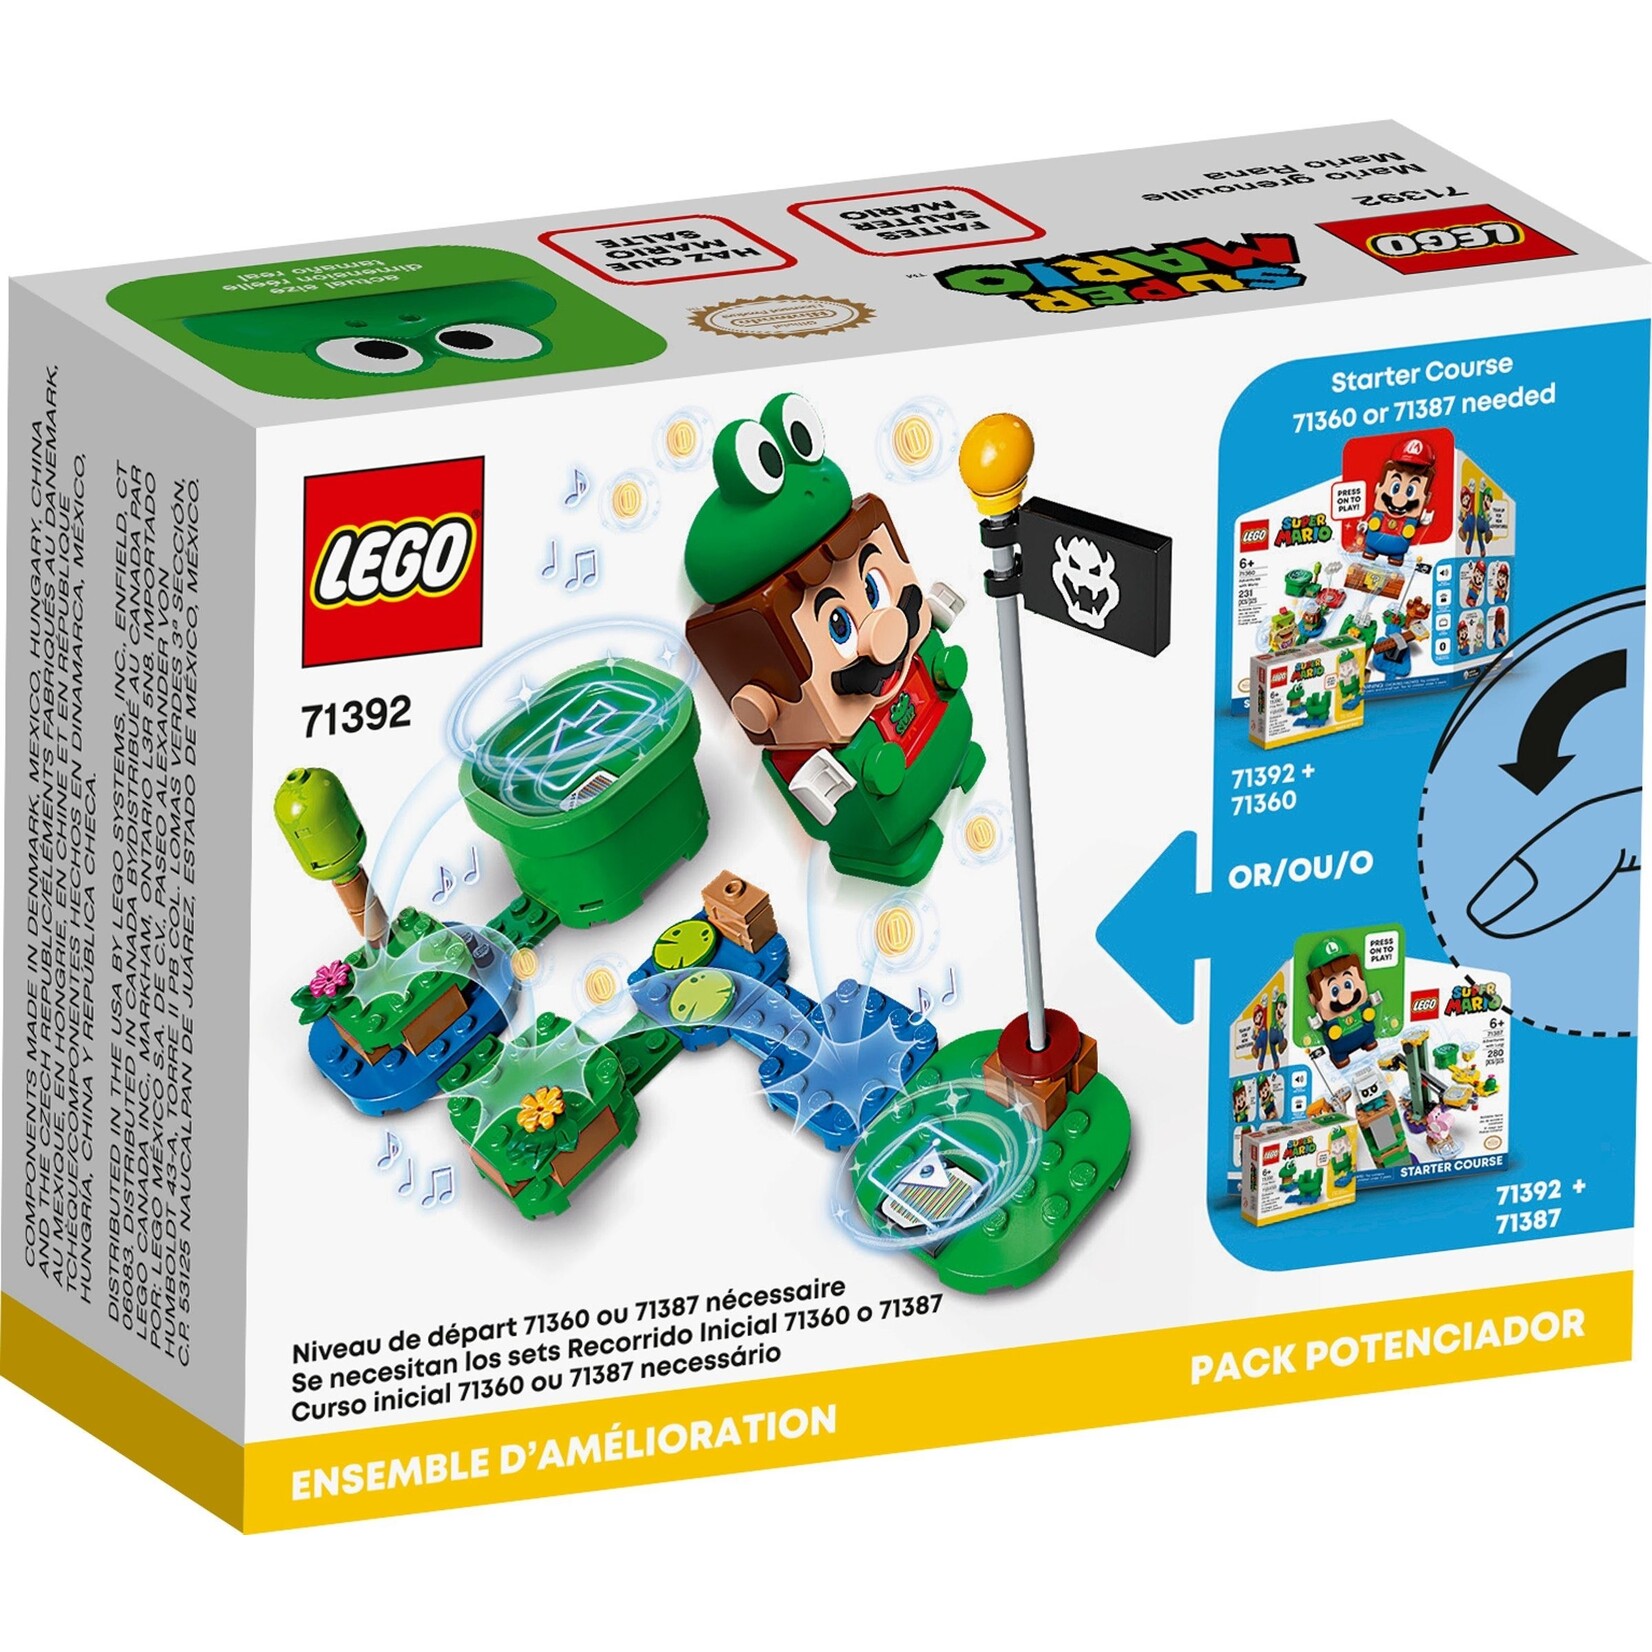 LEGO Power-uppakket: Kikker-Mario 71392